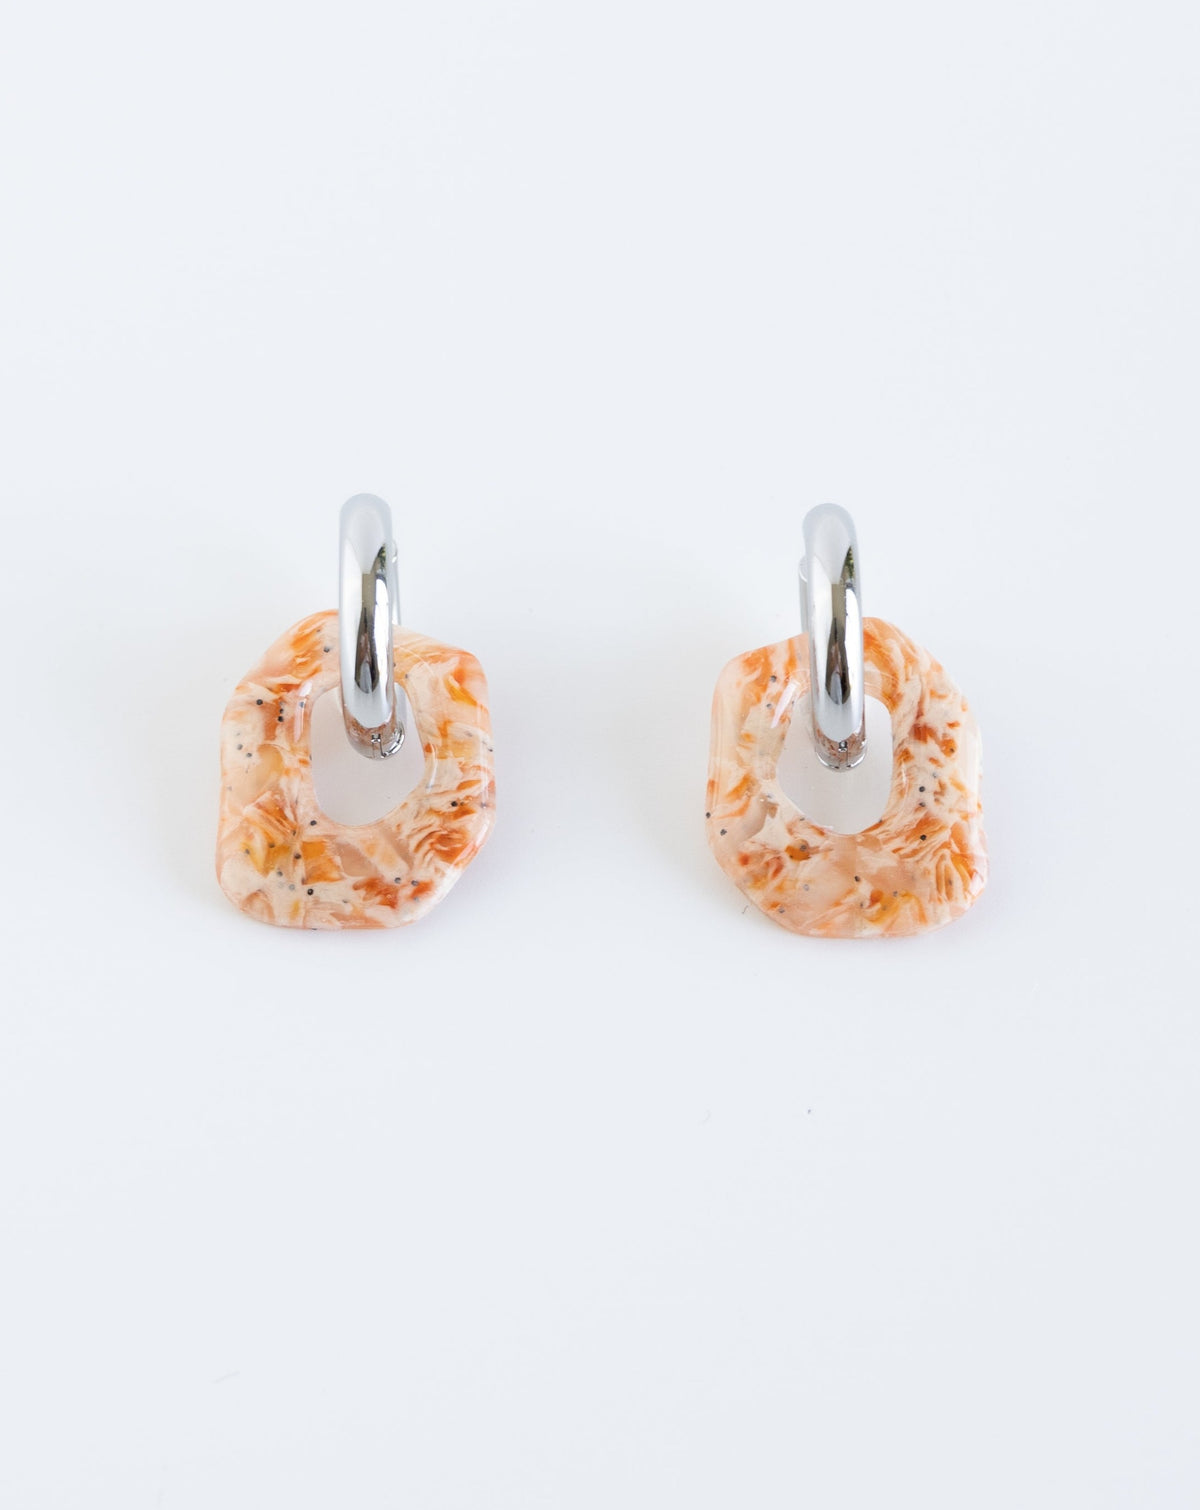 Darien earrings in Marble orange pattern with silver hoops, front view